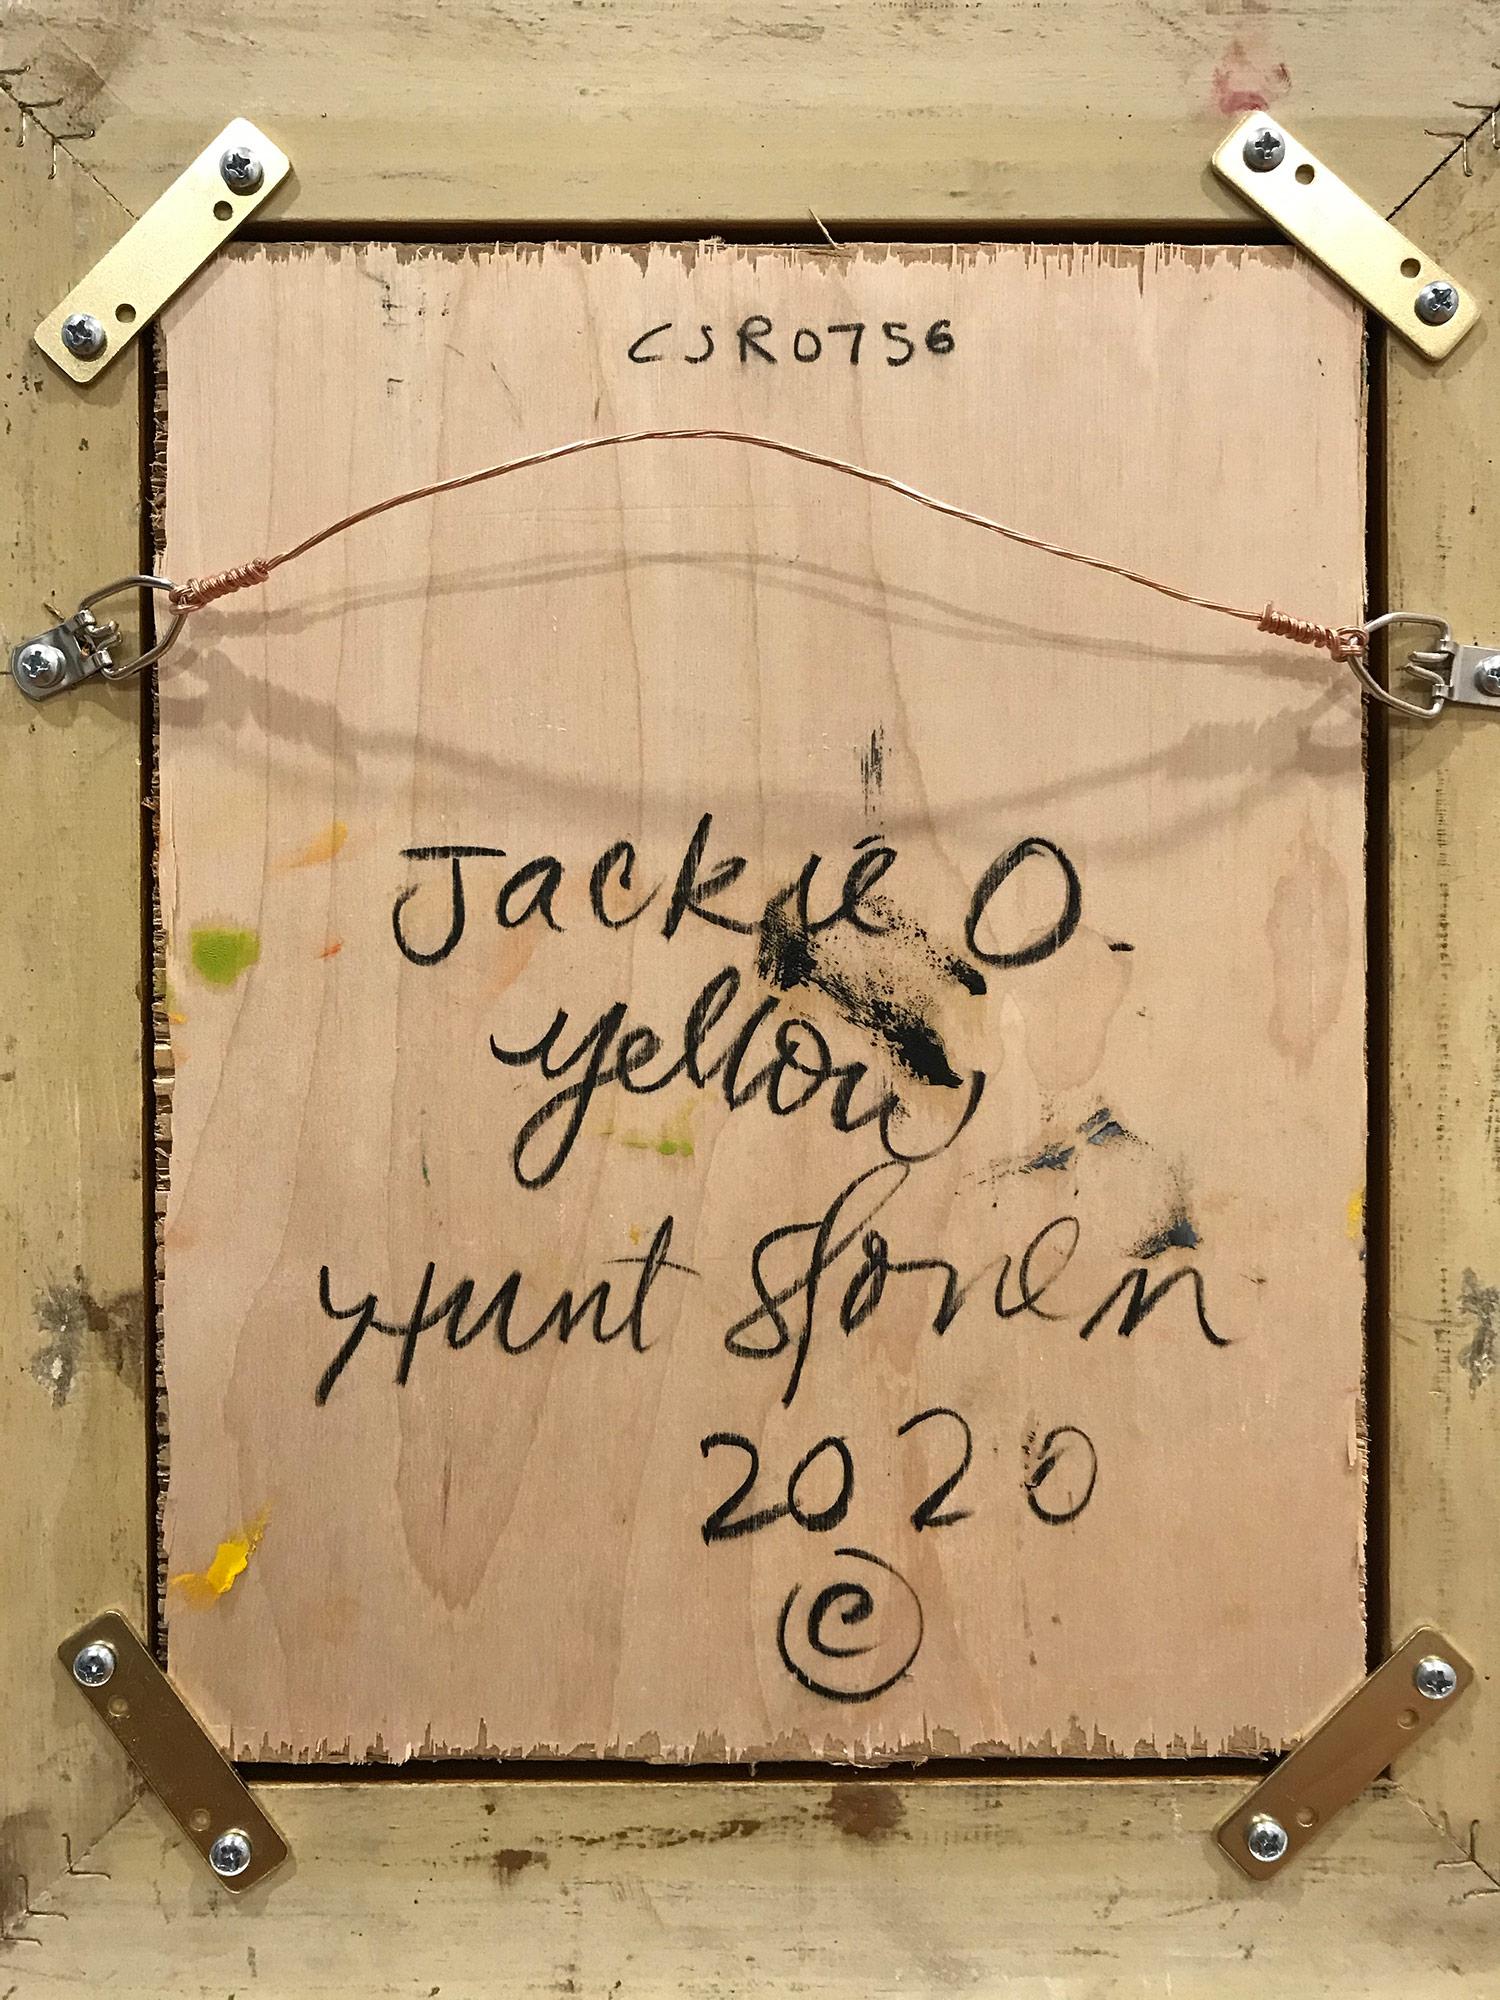 Jackie O - Yellow (Bunny on Royal Yellow) Oil Painting on Wood Panel 5